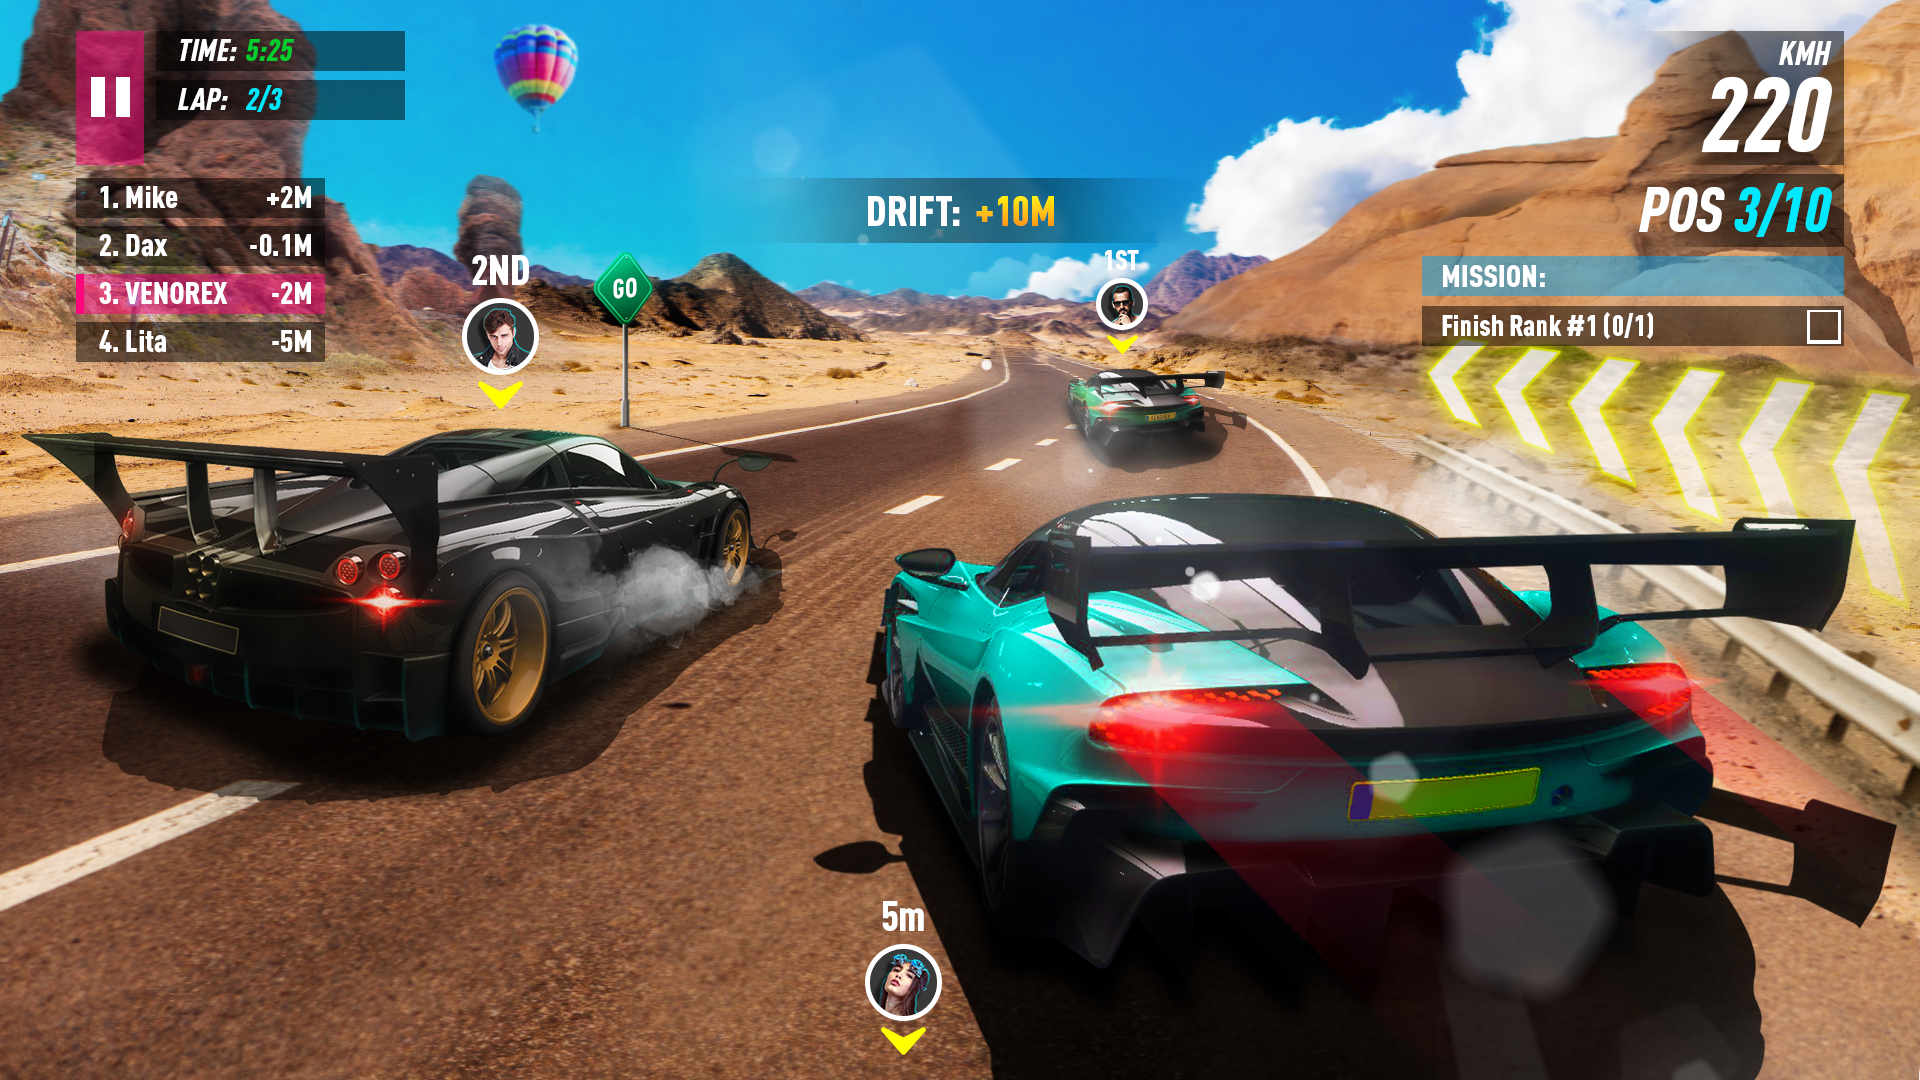 Extreme Asphalt Car Racing - Free Play & No Download